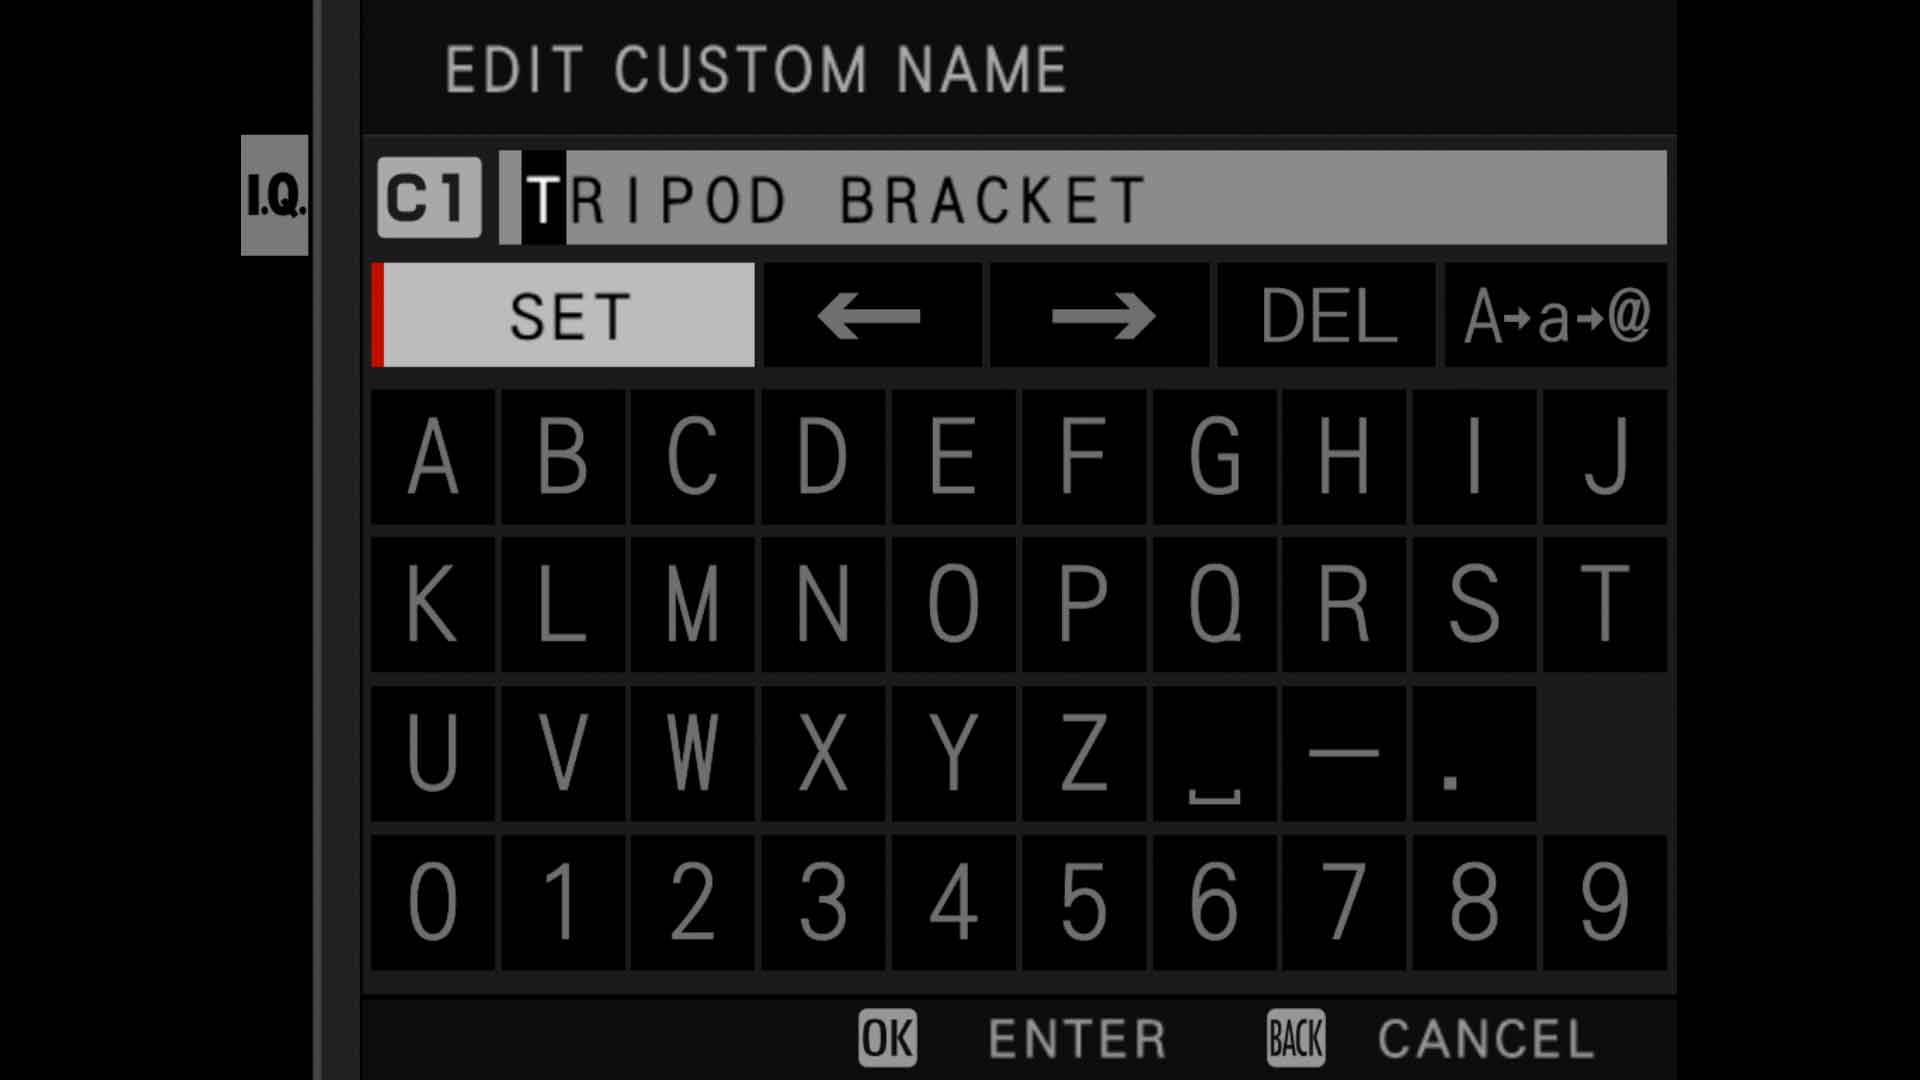 Edit Custom Name keyboard UI on Fuji GFX 100s